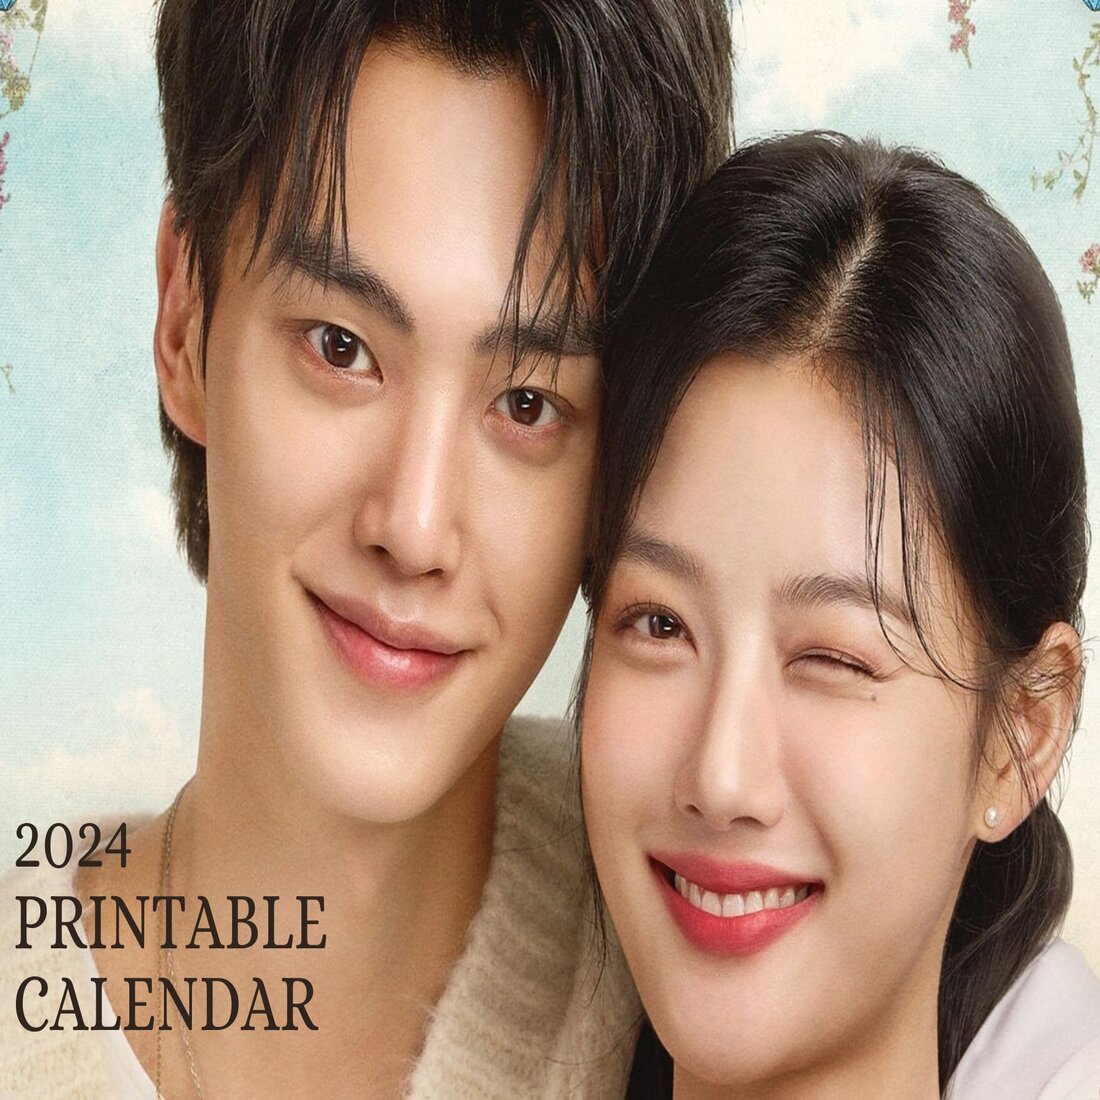 2024 Printable Calendar cover image.